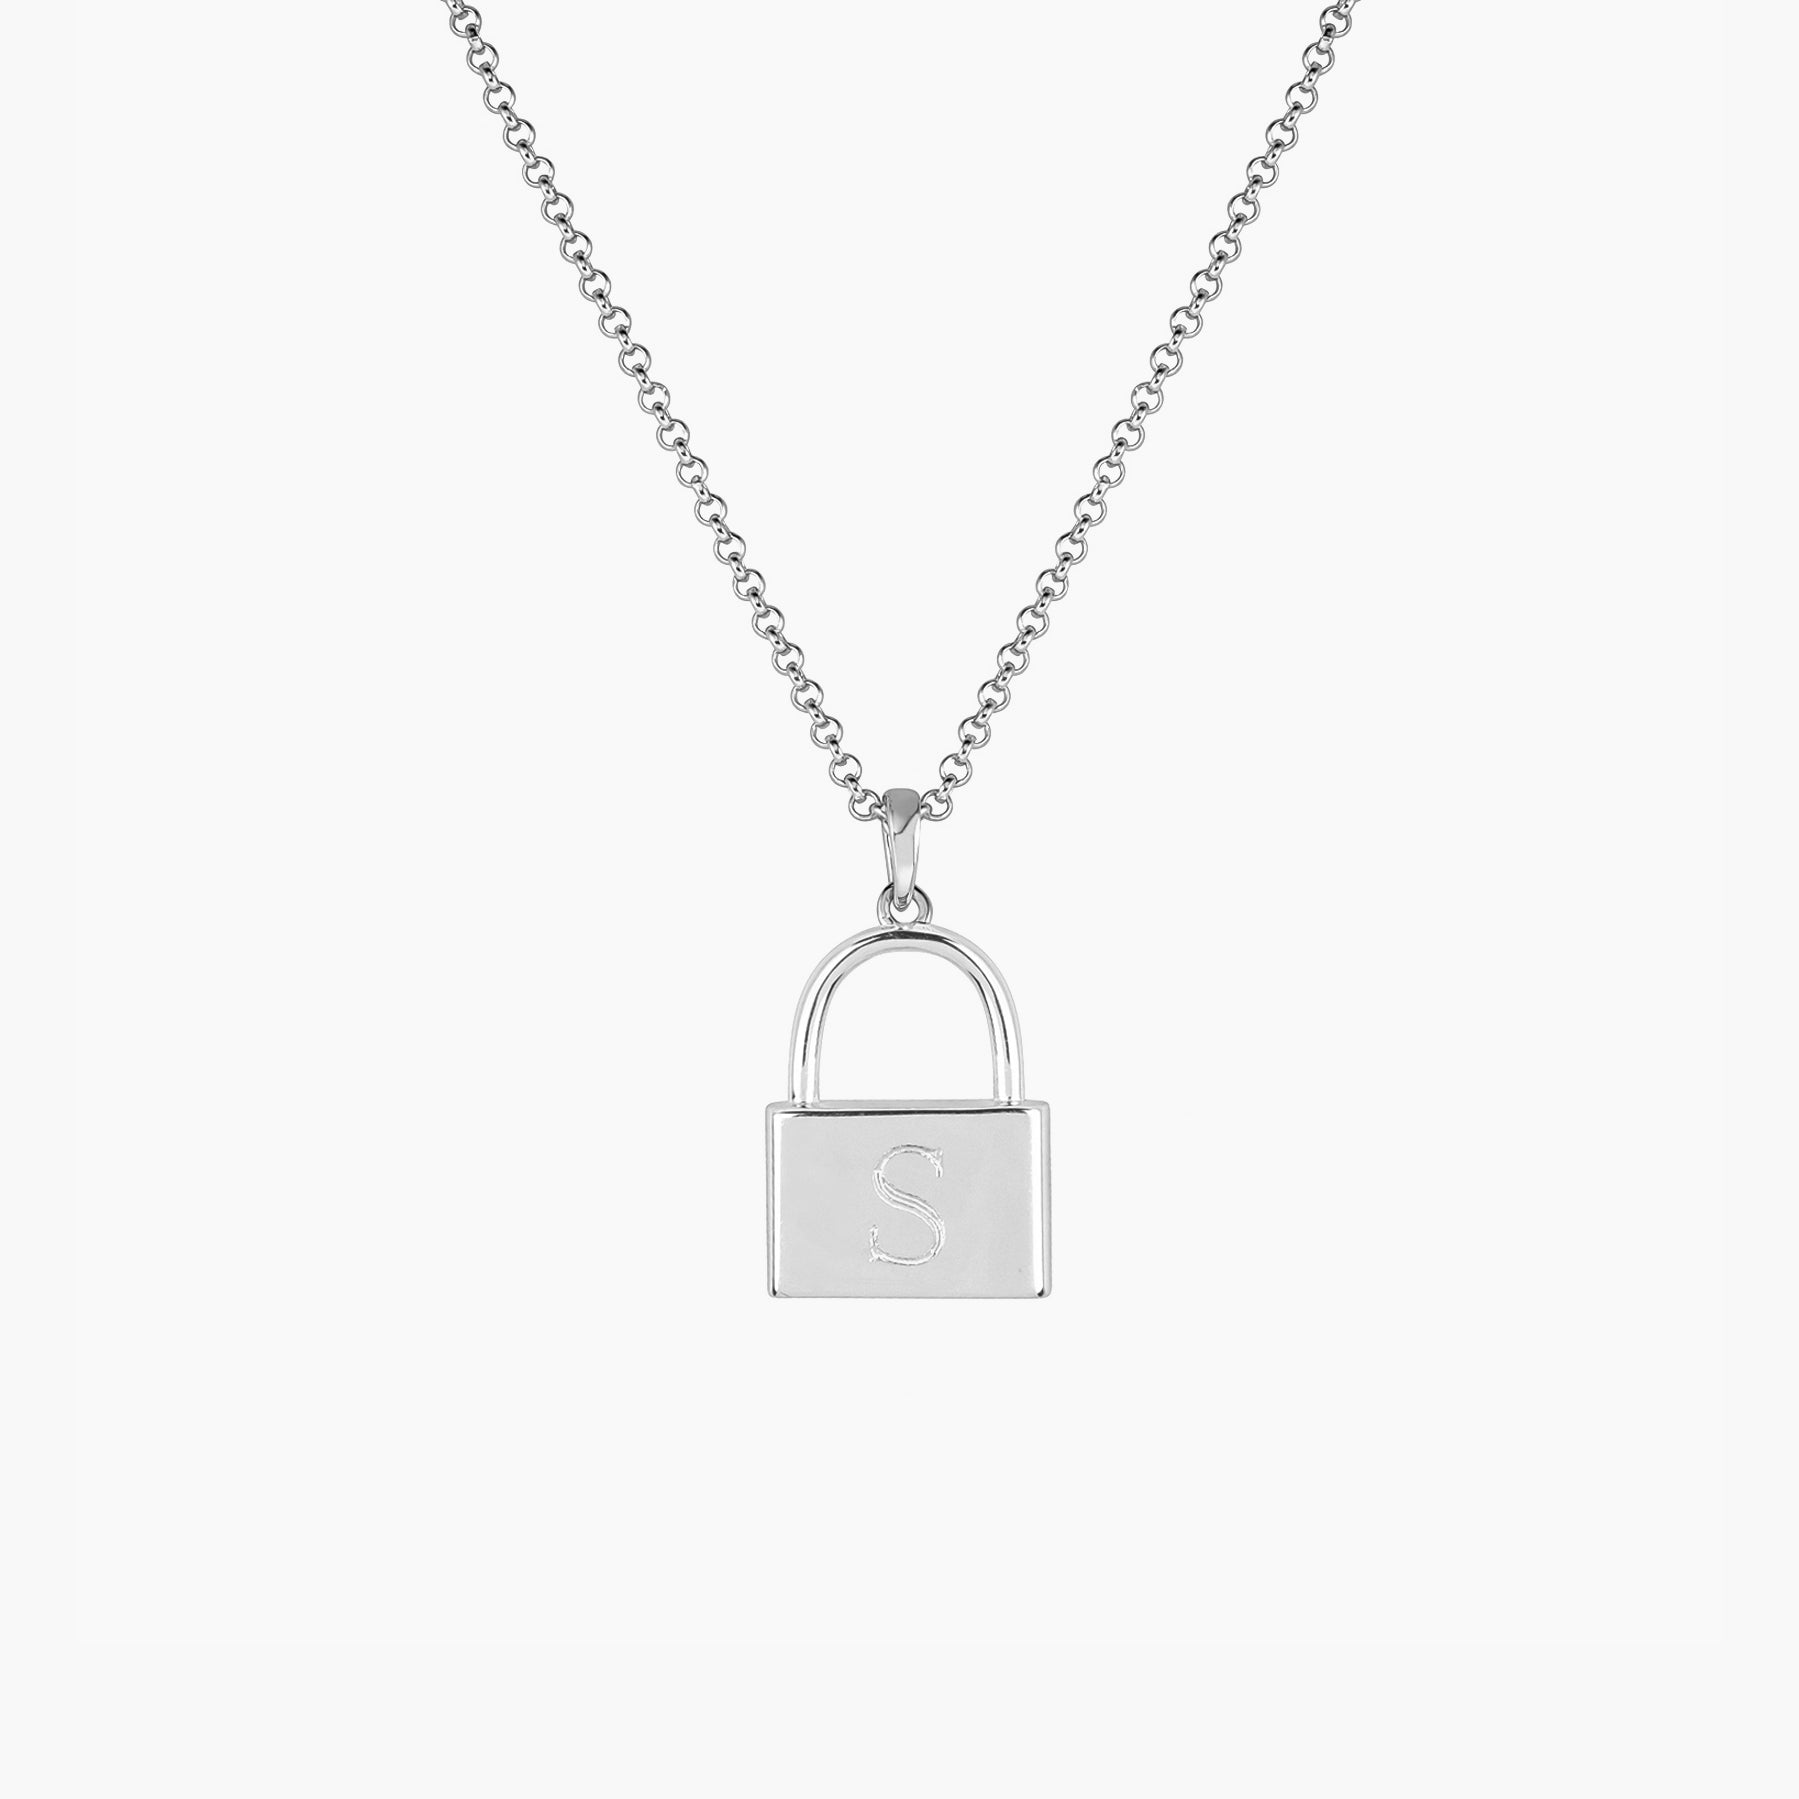 Sterling Silver, Mini Lock Necklace, Gold Padlock Charm, Silver Lock,  N031536 | eBay